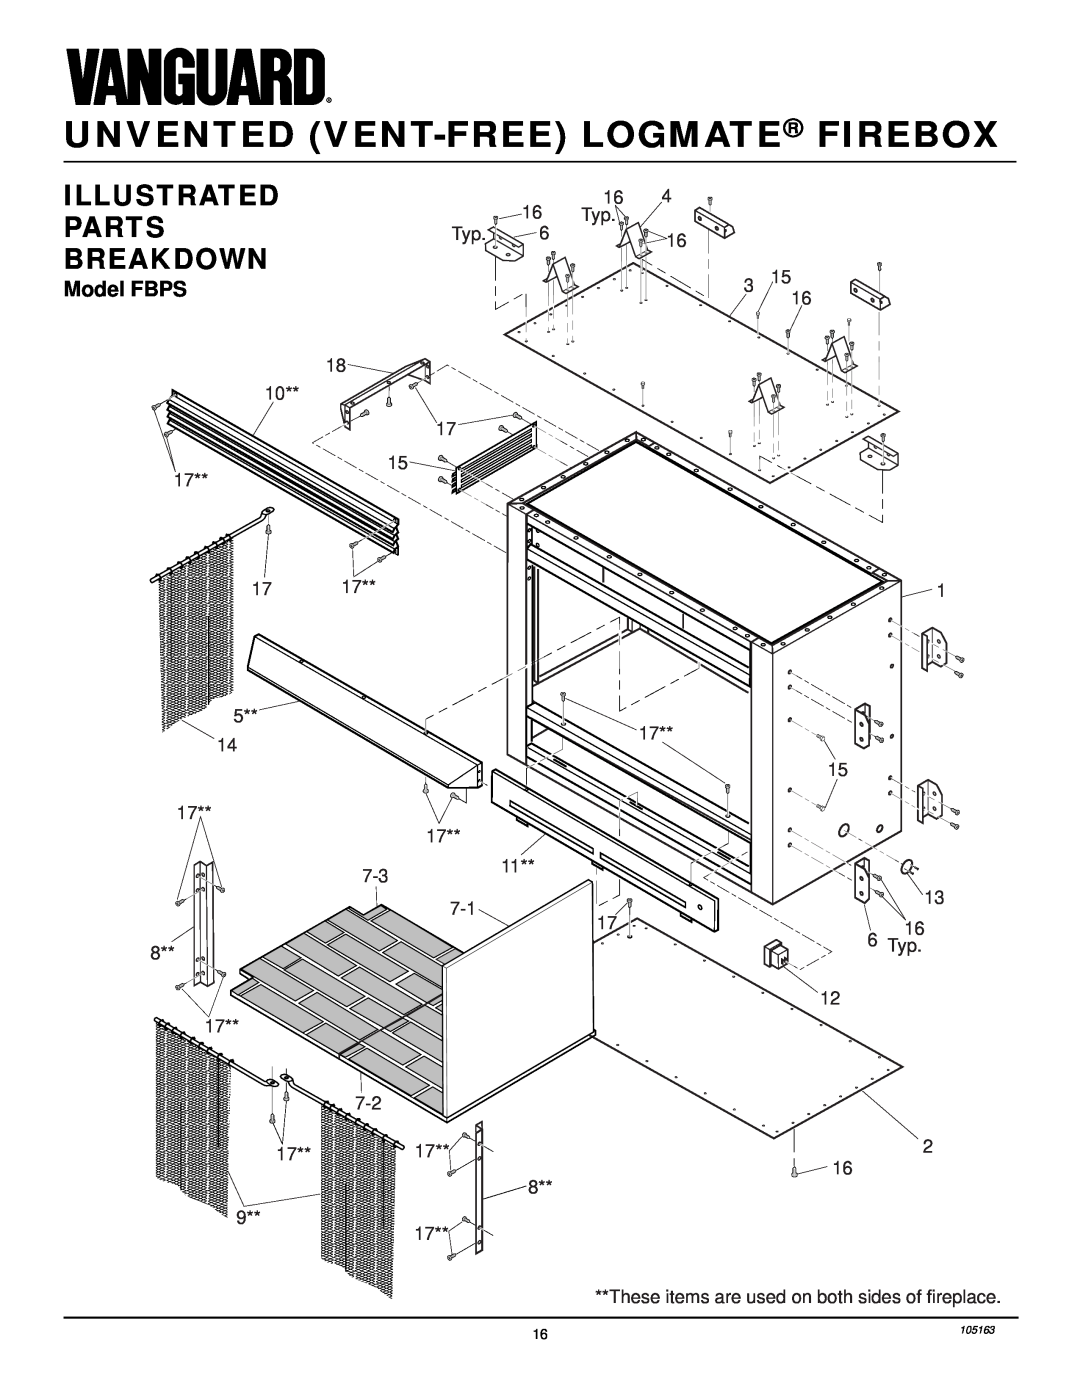 Desa installation manual Illustrated, Breakdown, Unvented Vent-Freelogmate Firebox, Model FBPS 